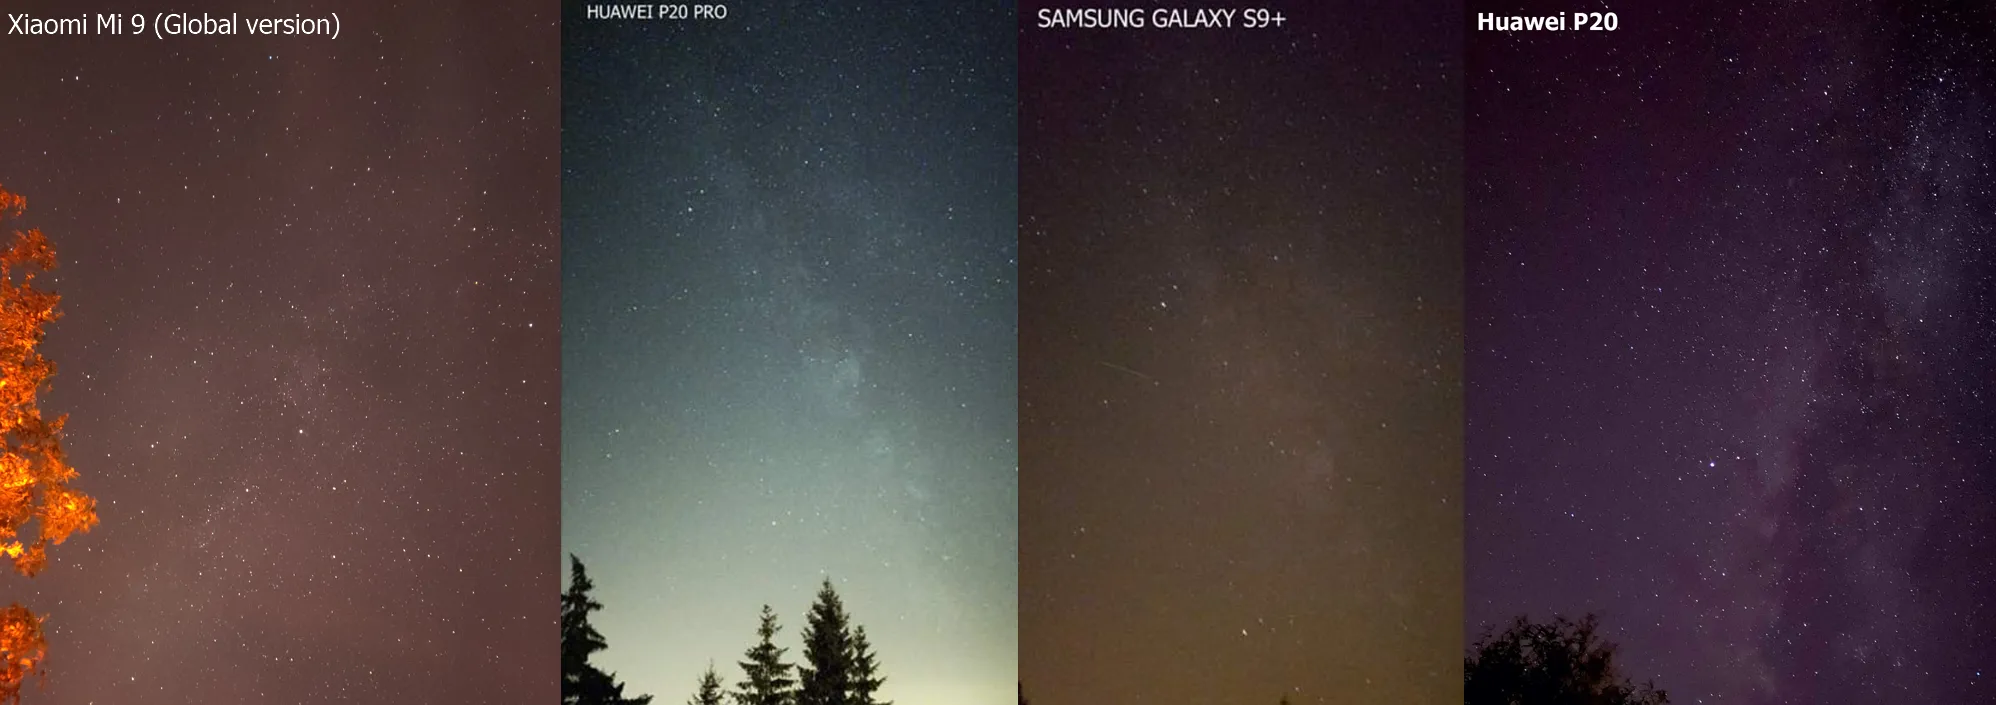 Xiaomi Mi 9, Huawei P20 Pro night image comparison, Samsung Galaxy S9+ 